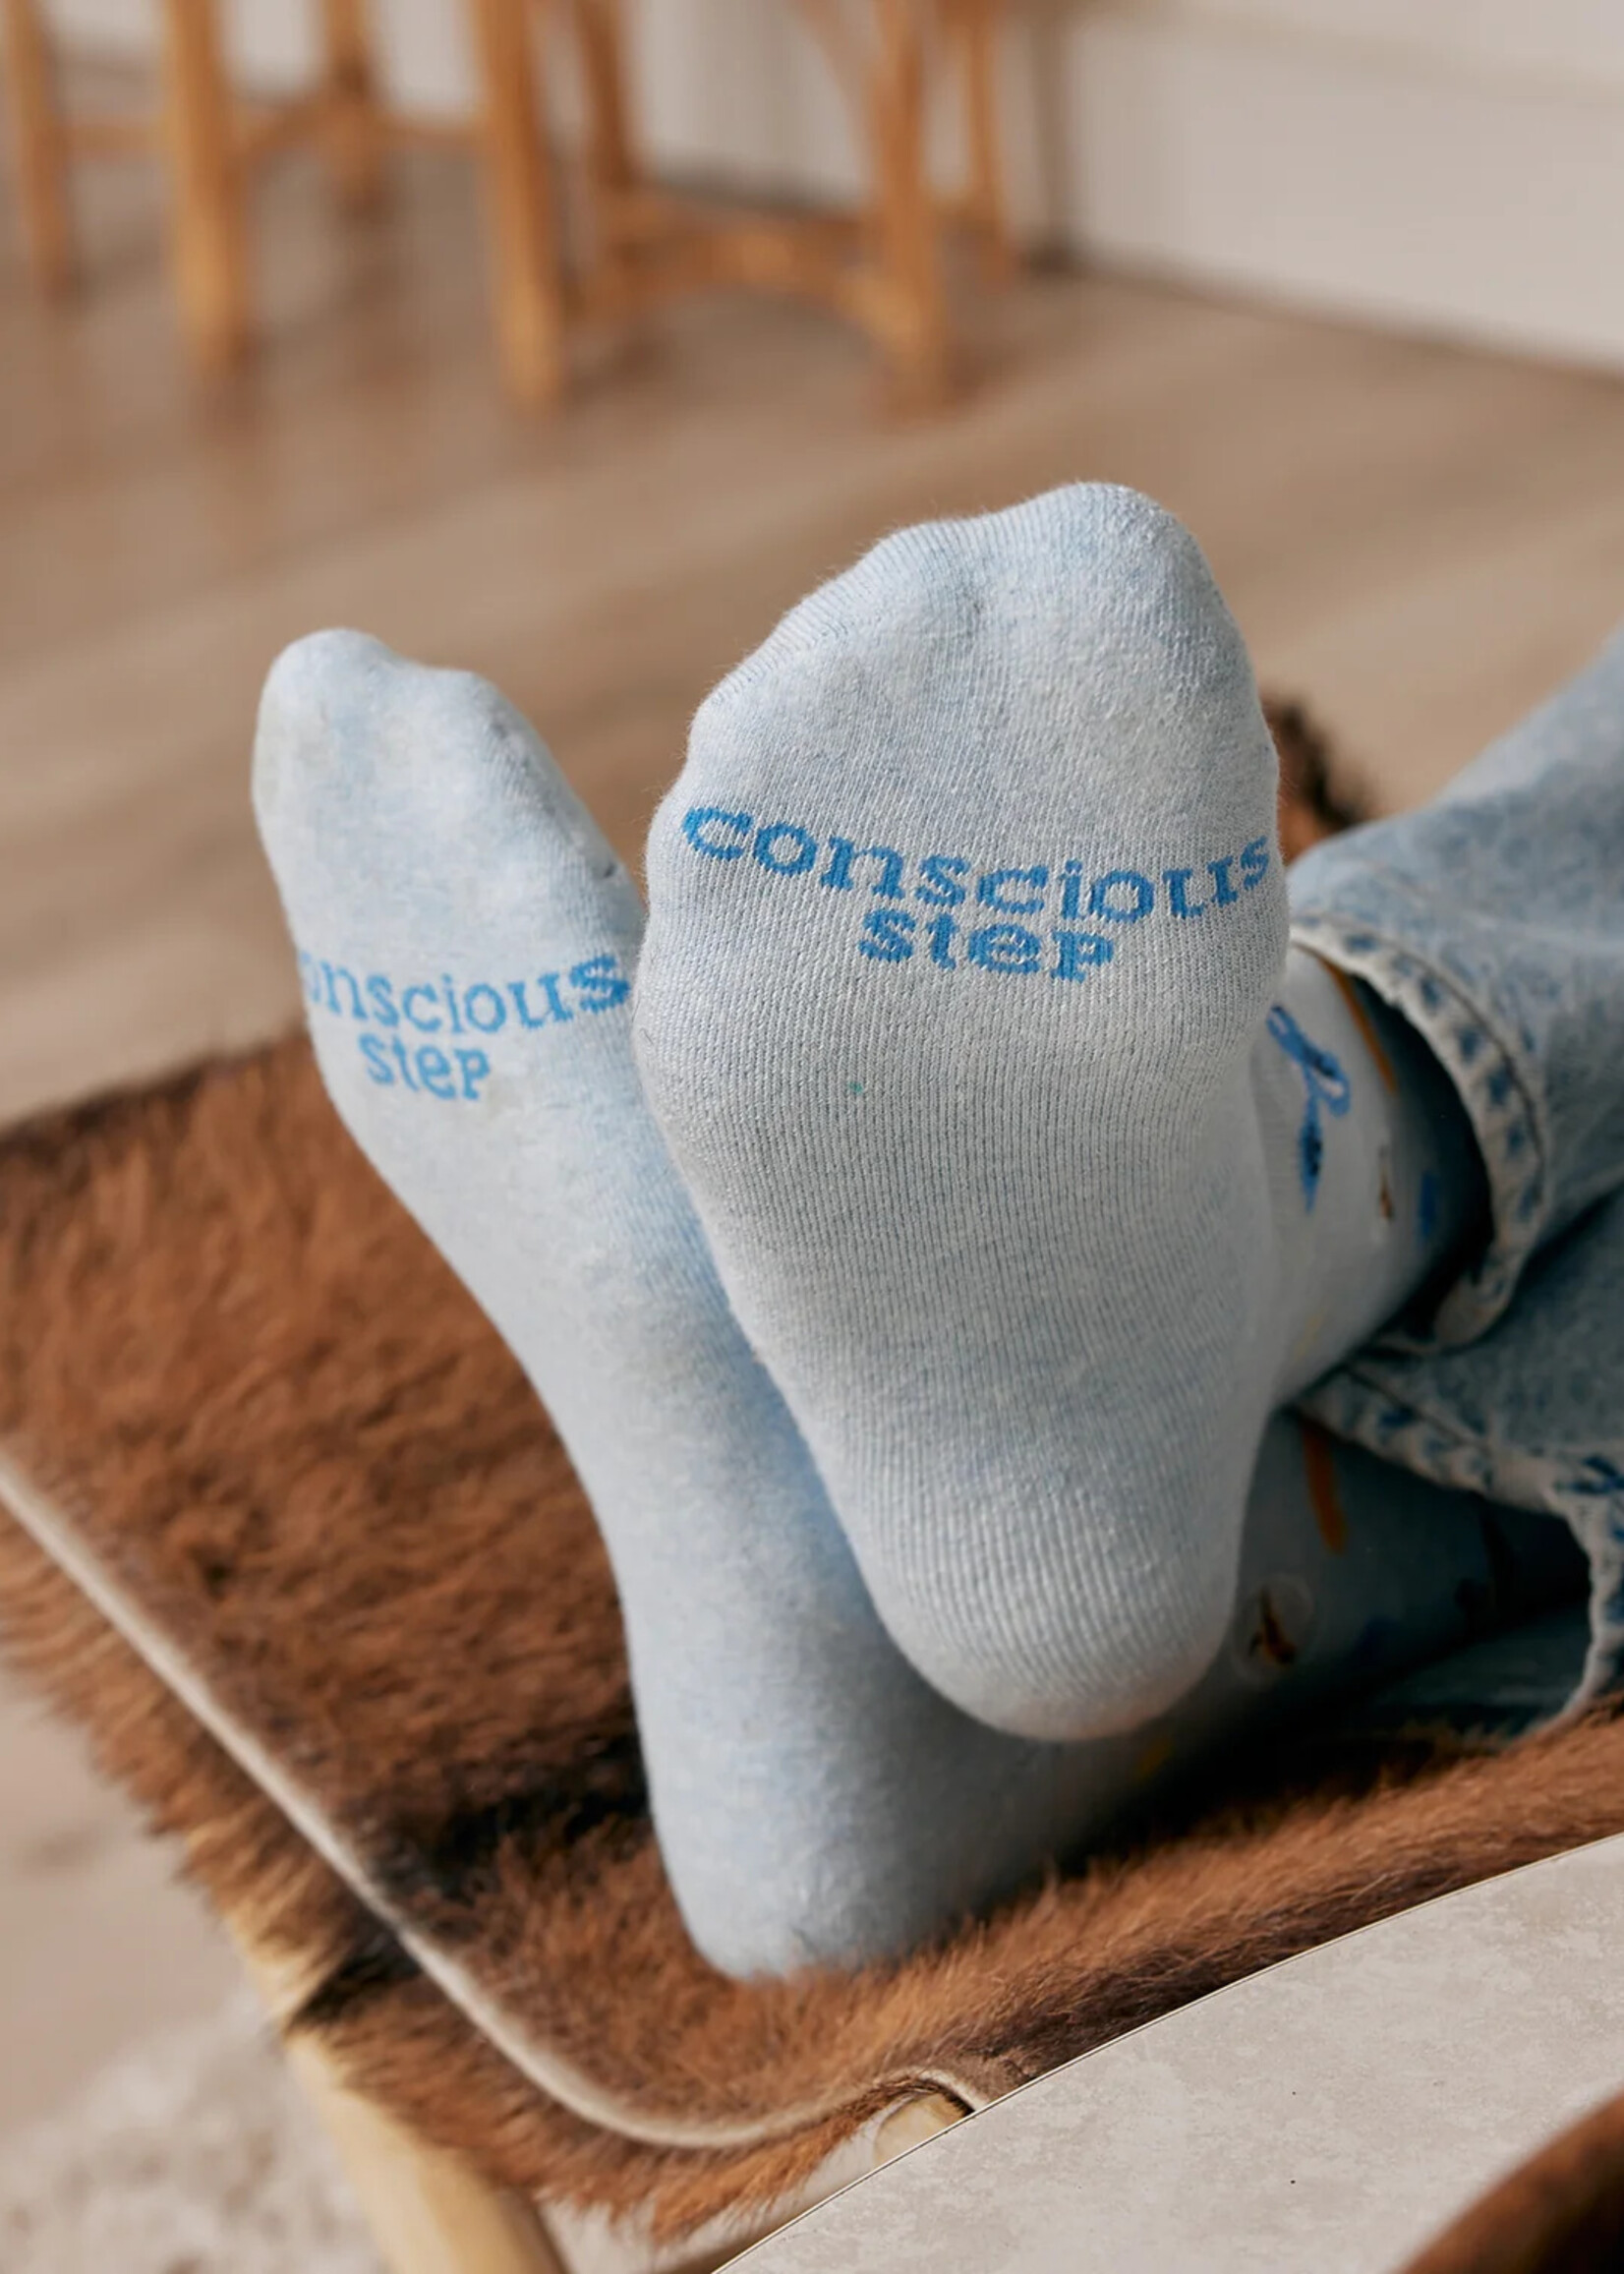 Conscious Step Men's Blue Songbird Socks